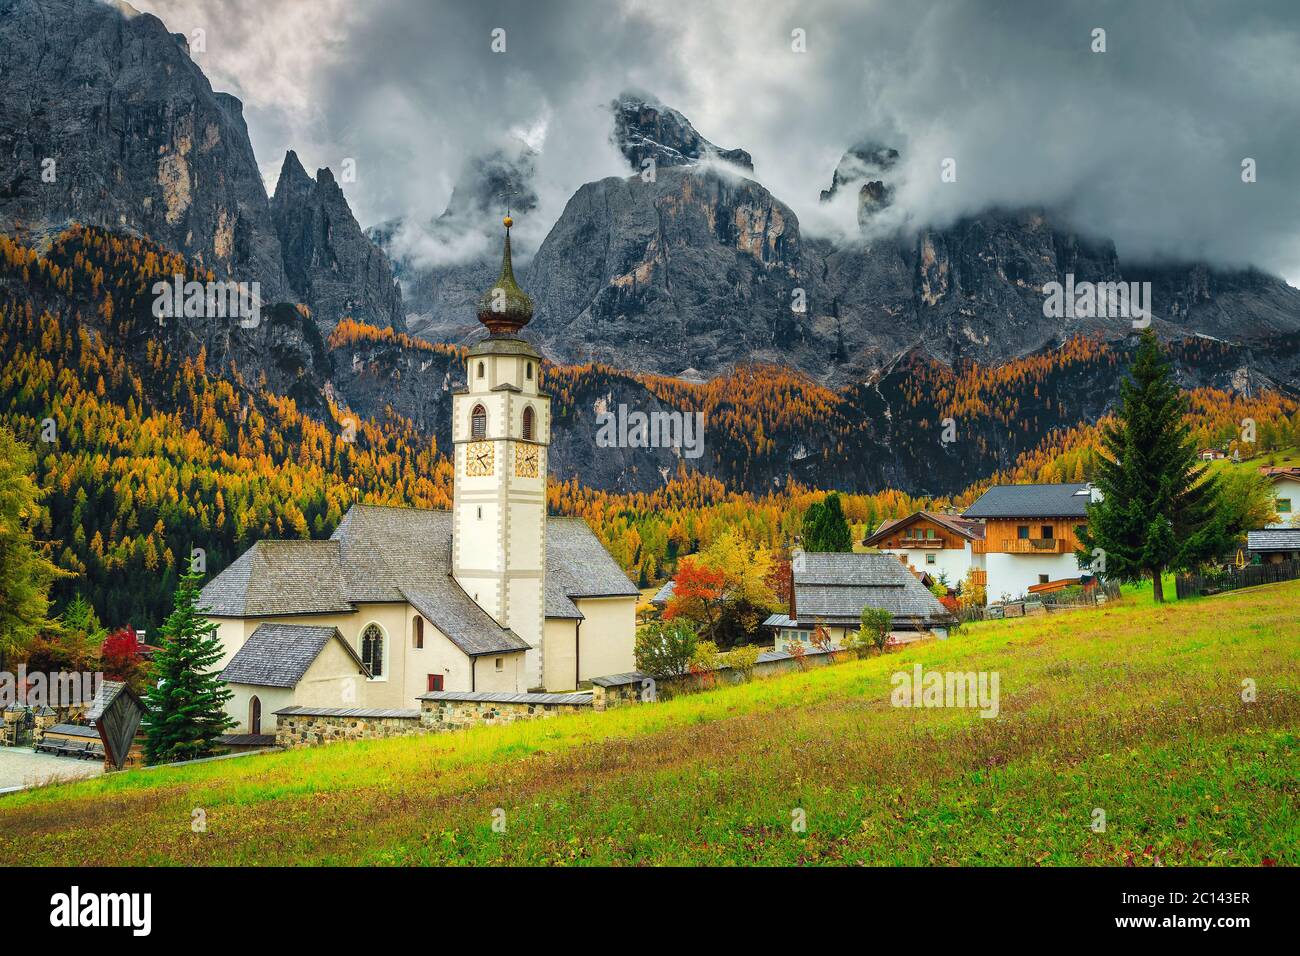 Stunning autumn mountain scenery with cute church in the fabulous alpine village, Colfosco, Dolomites, Italy, Europe Stock Photo